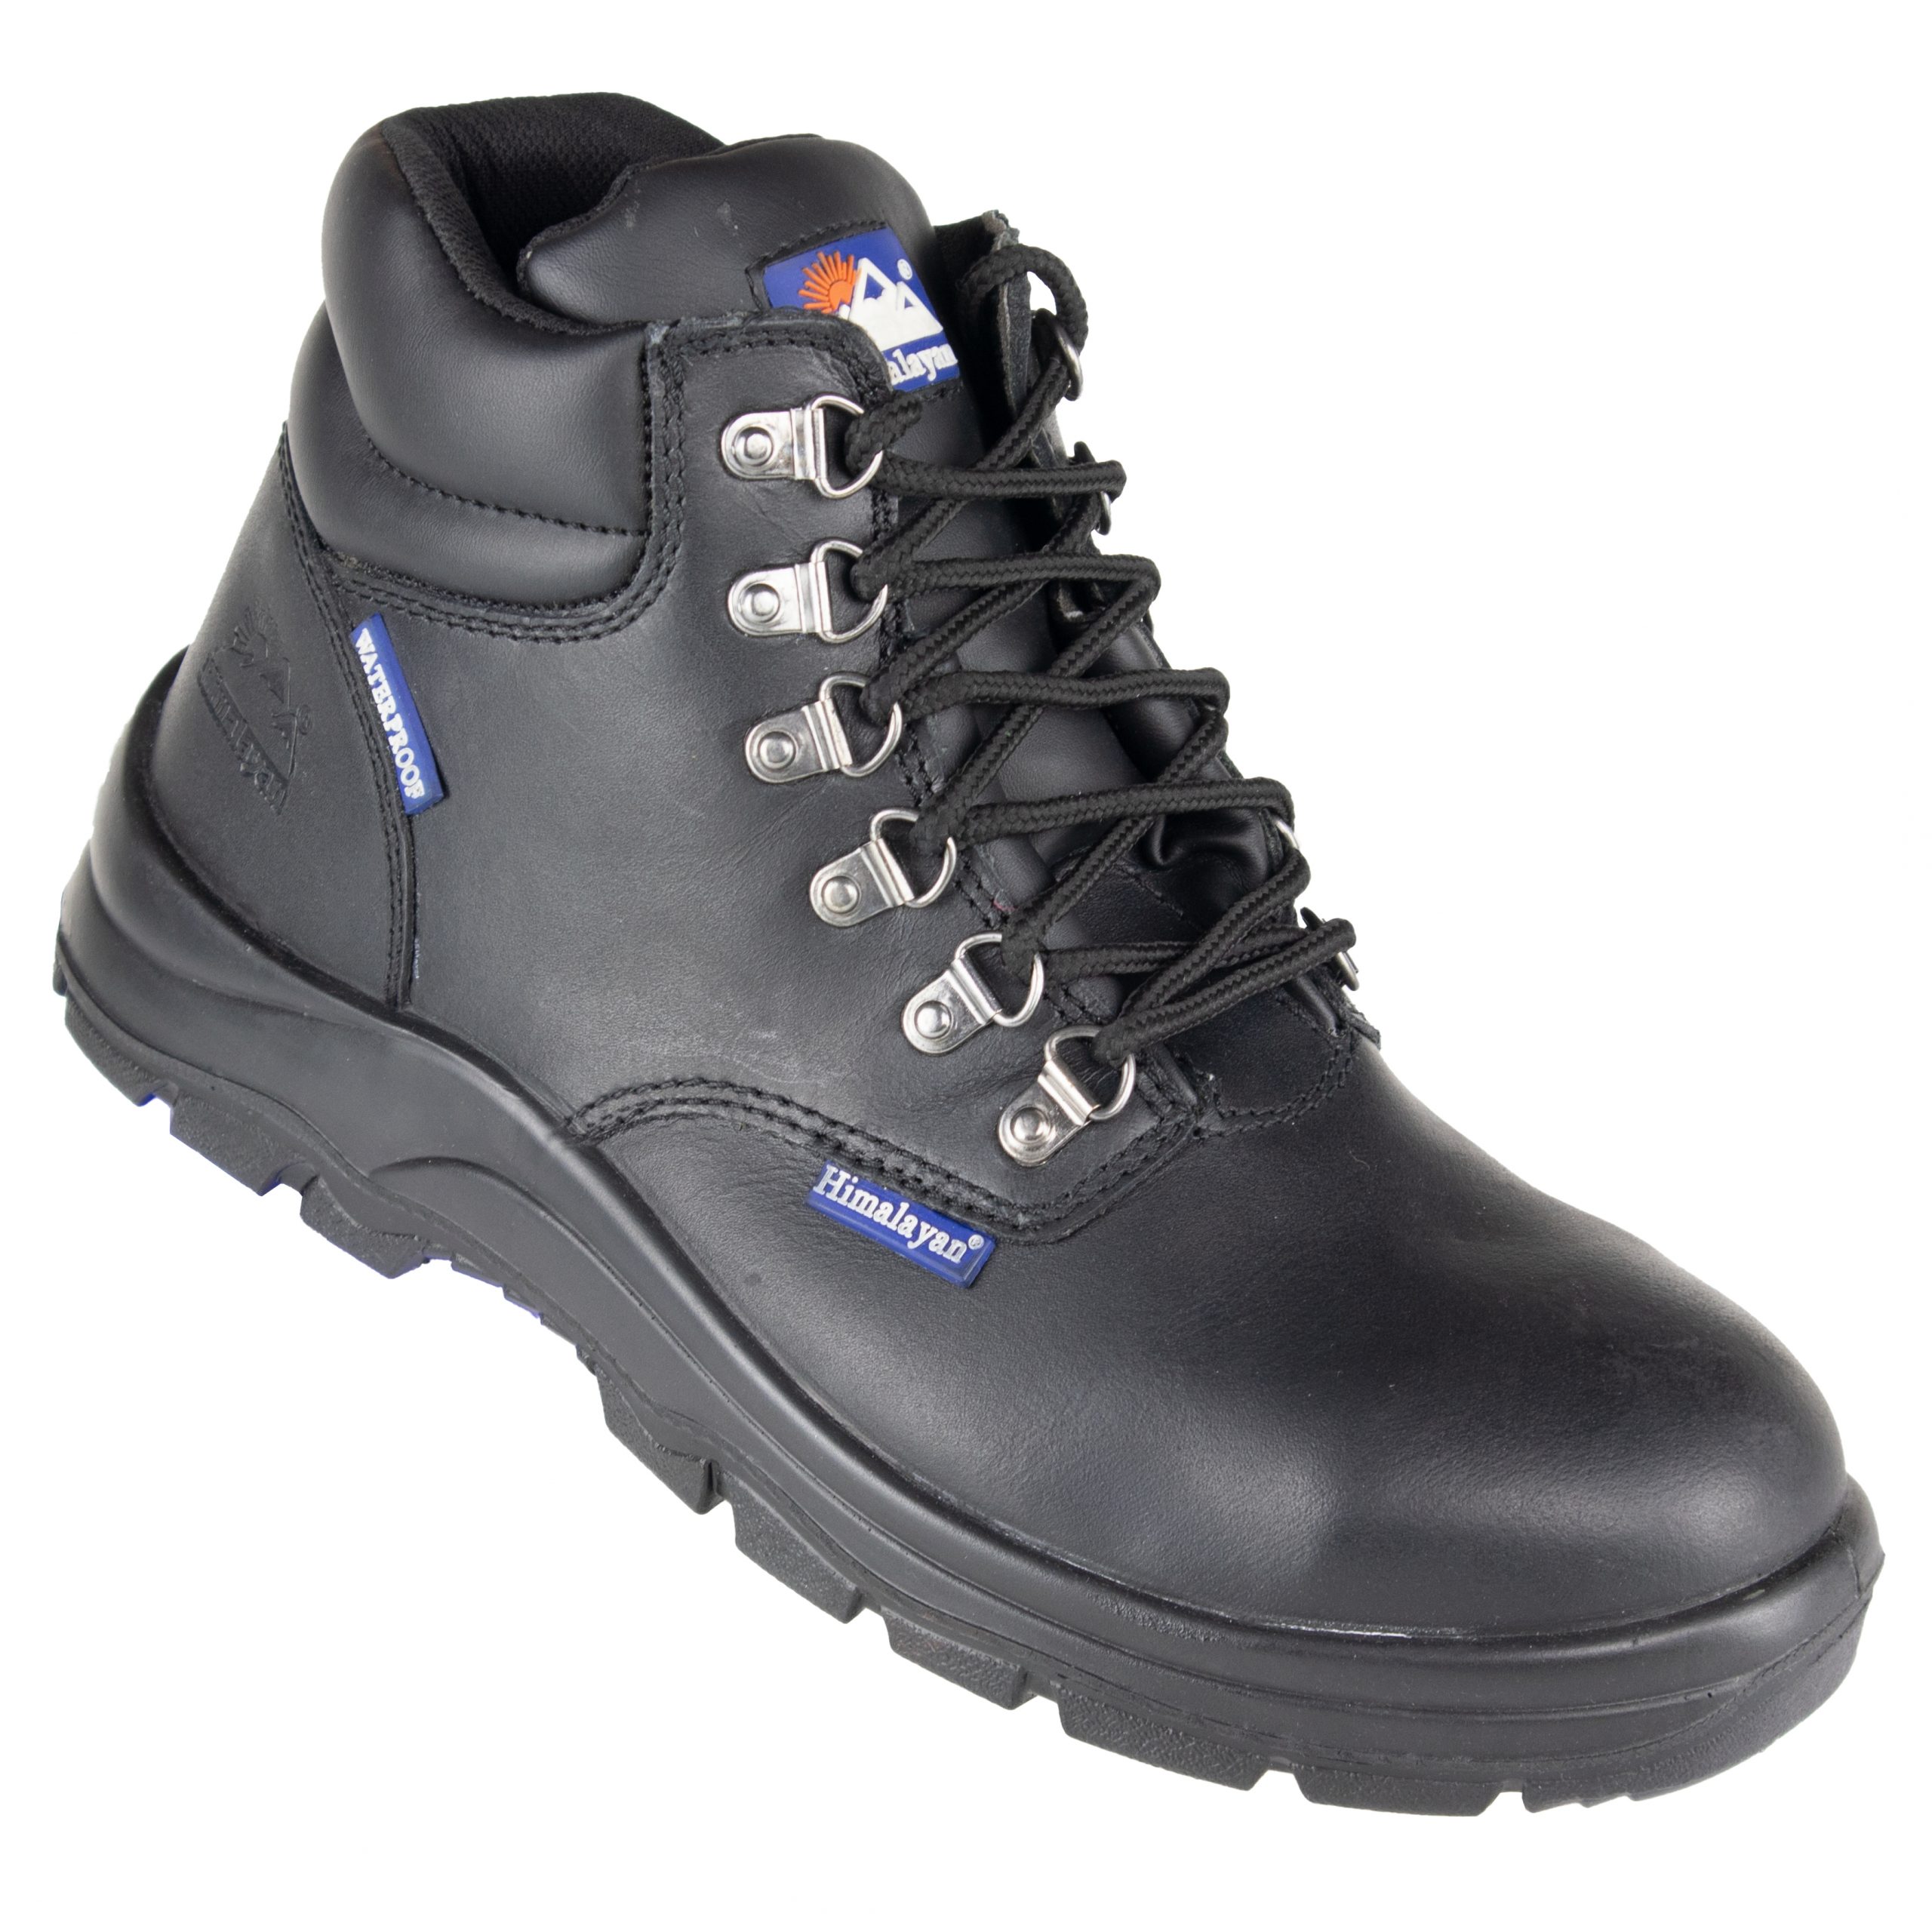 Himalayan 5220 Black Safety Boot Fully Waterproof